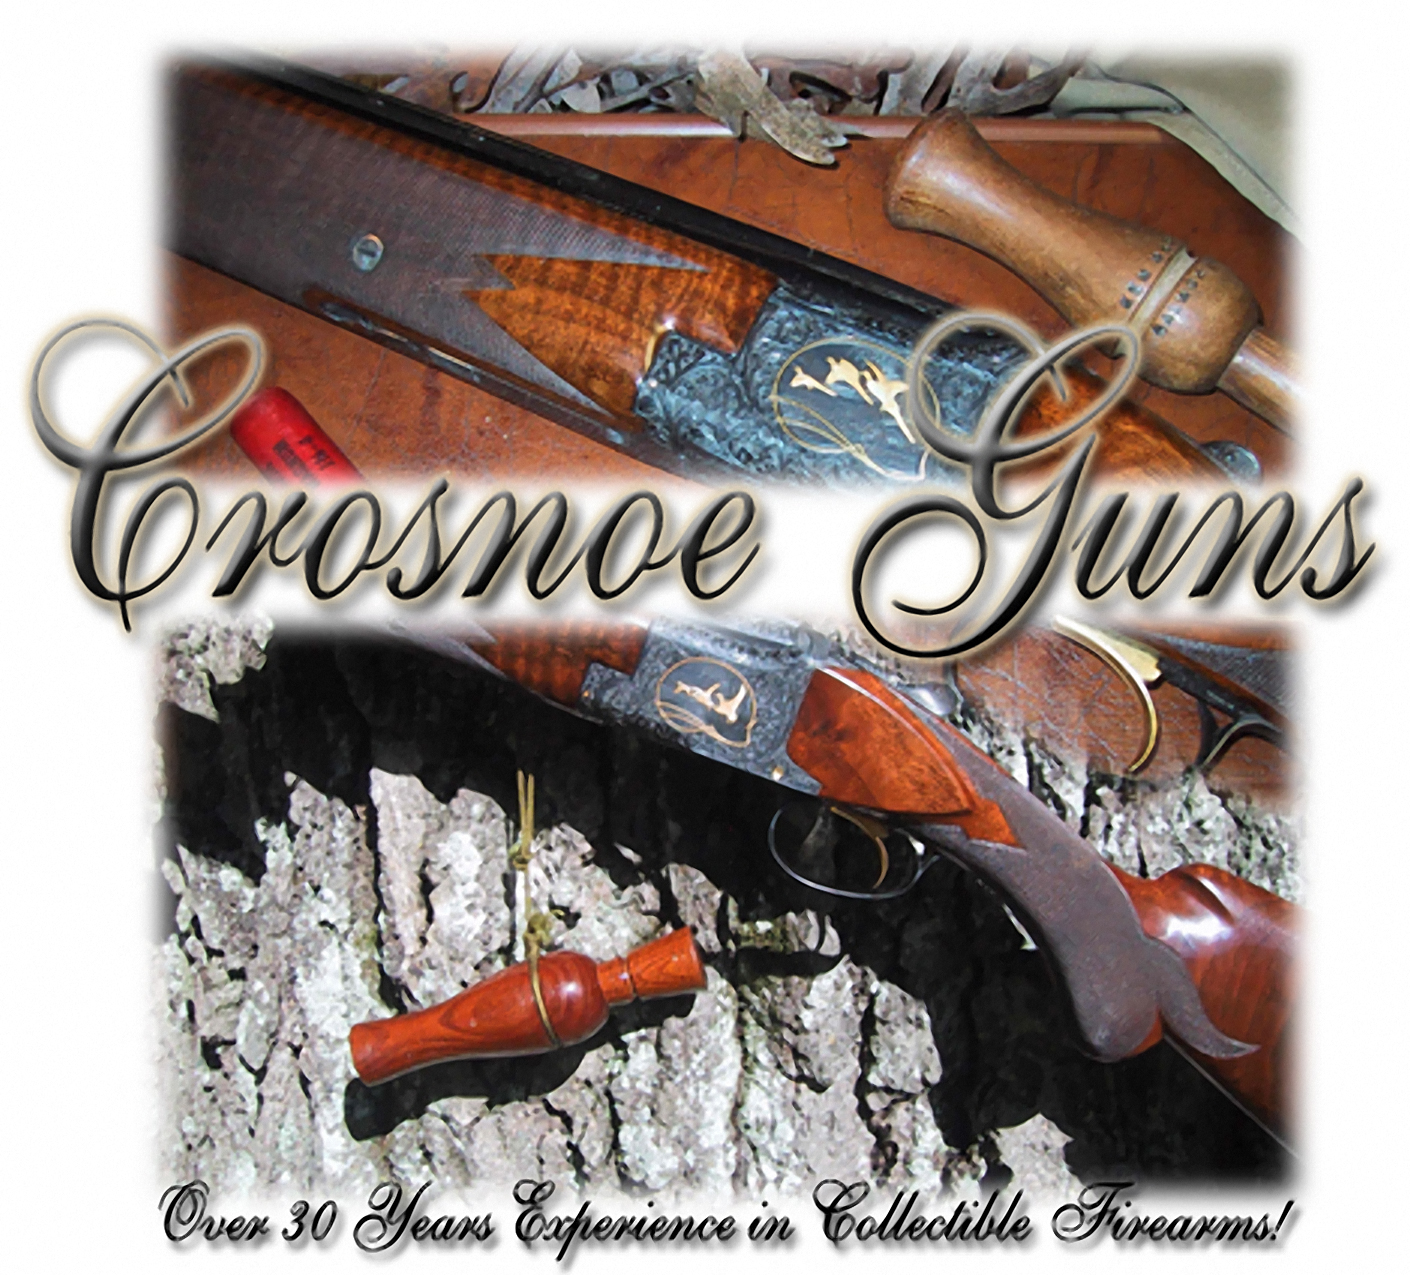 Crosnoe Guns